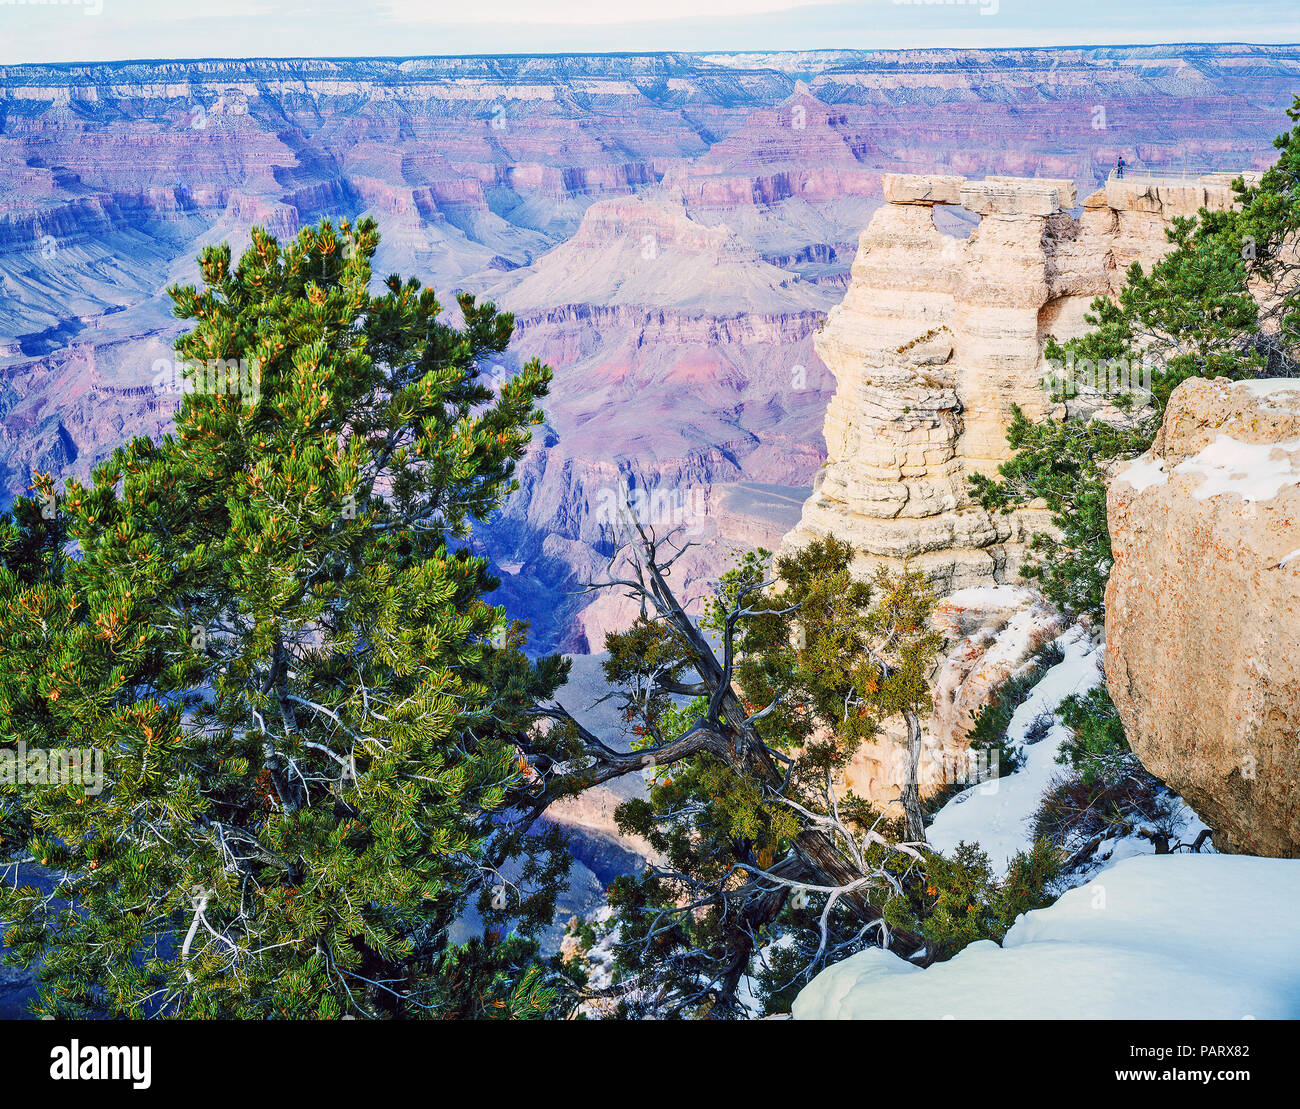 Grand Canyon in winter, Arizona Stock Photo - Alamy